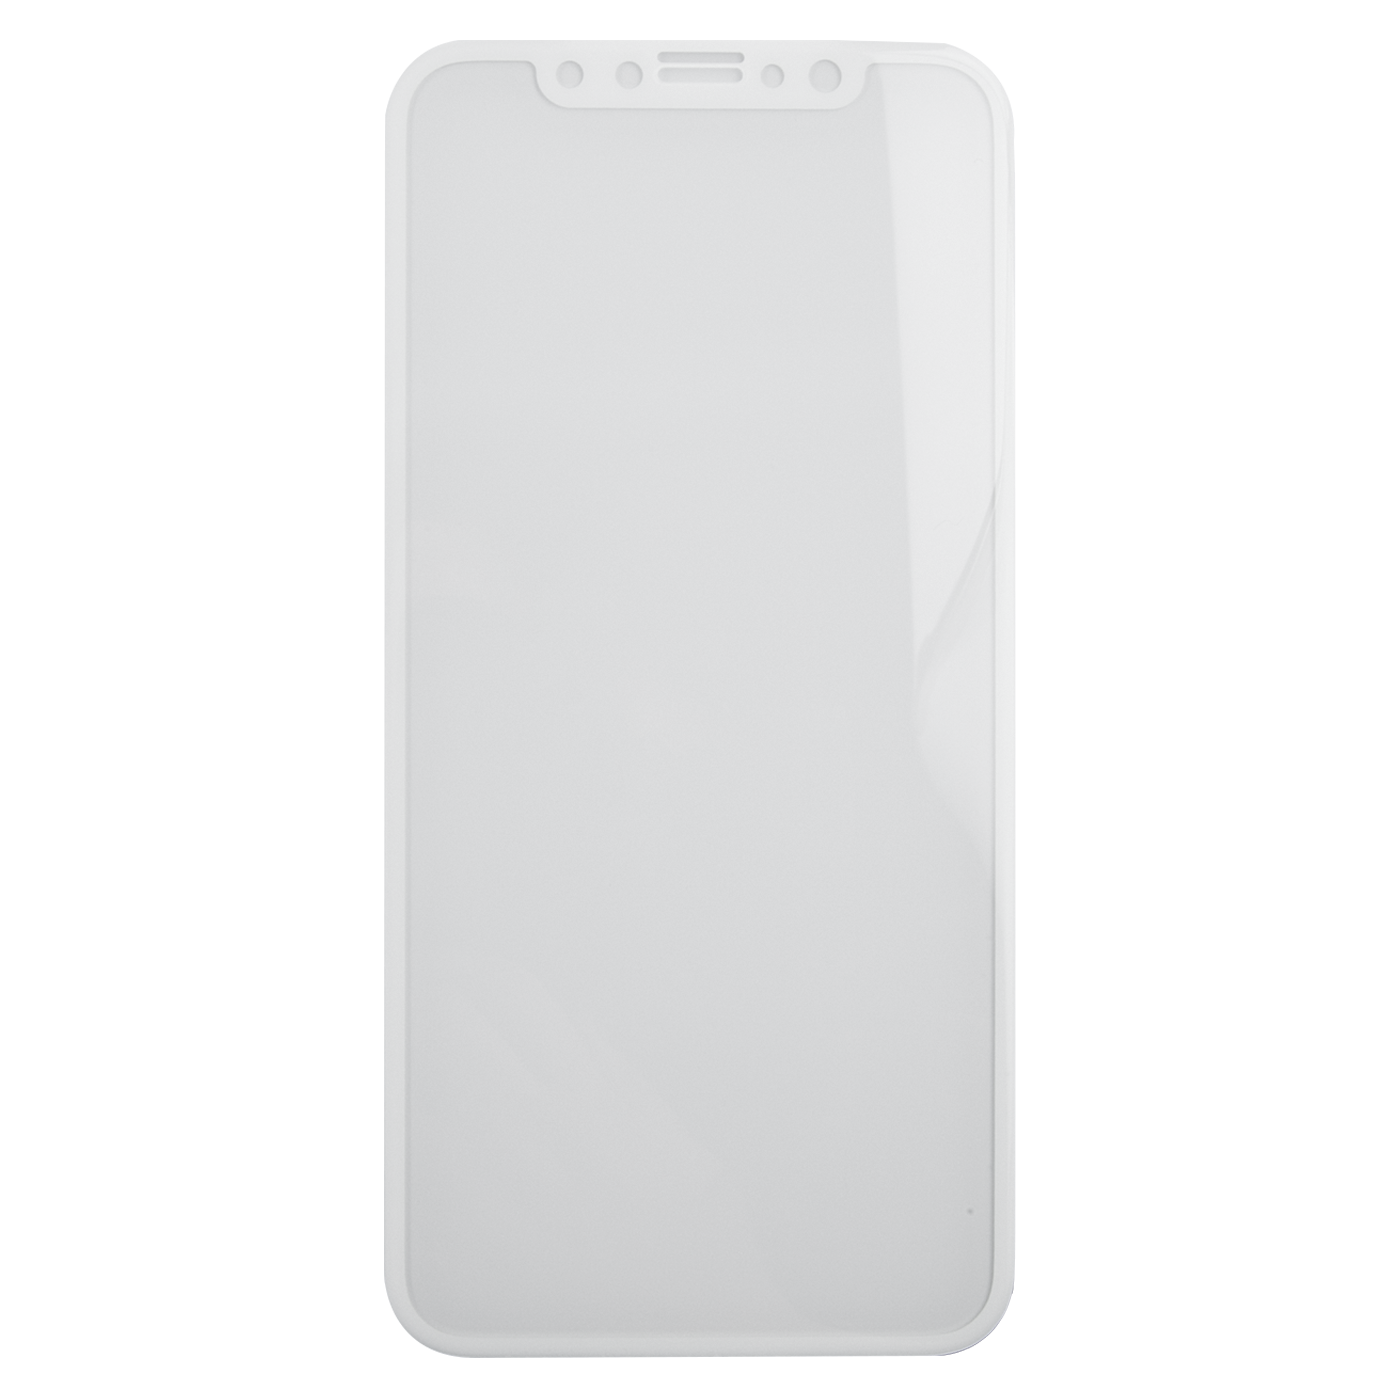 Защитный экран iPhone X/XS Full Screen tempered glass белый